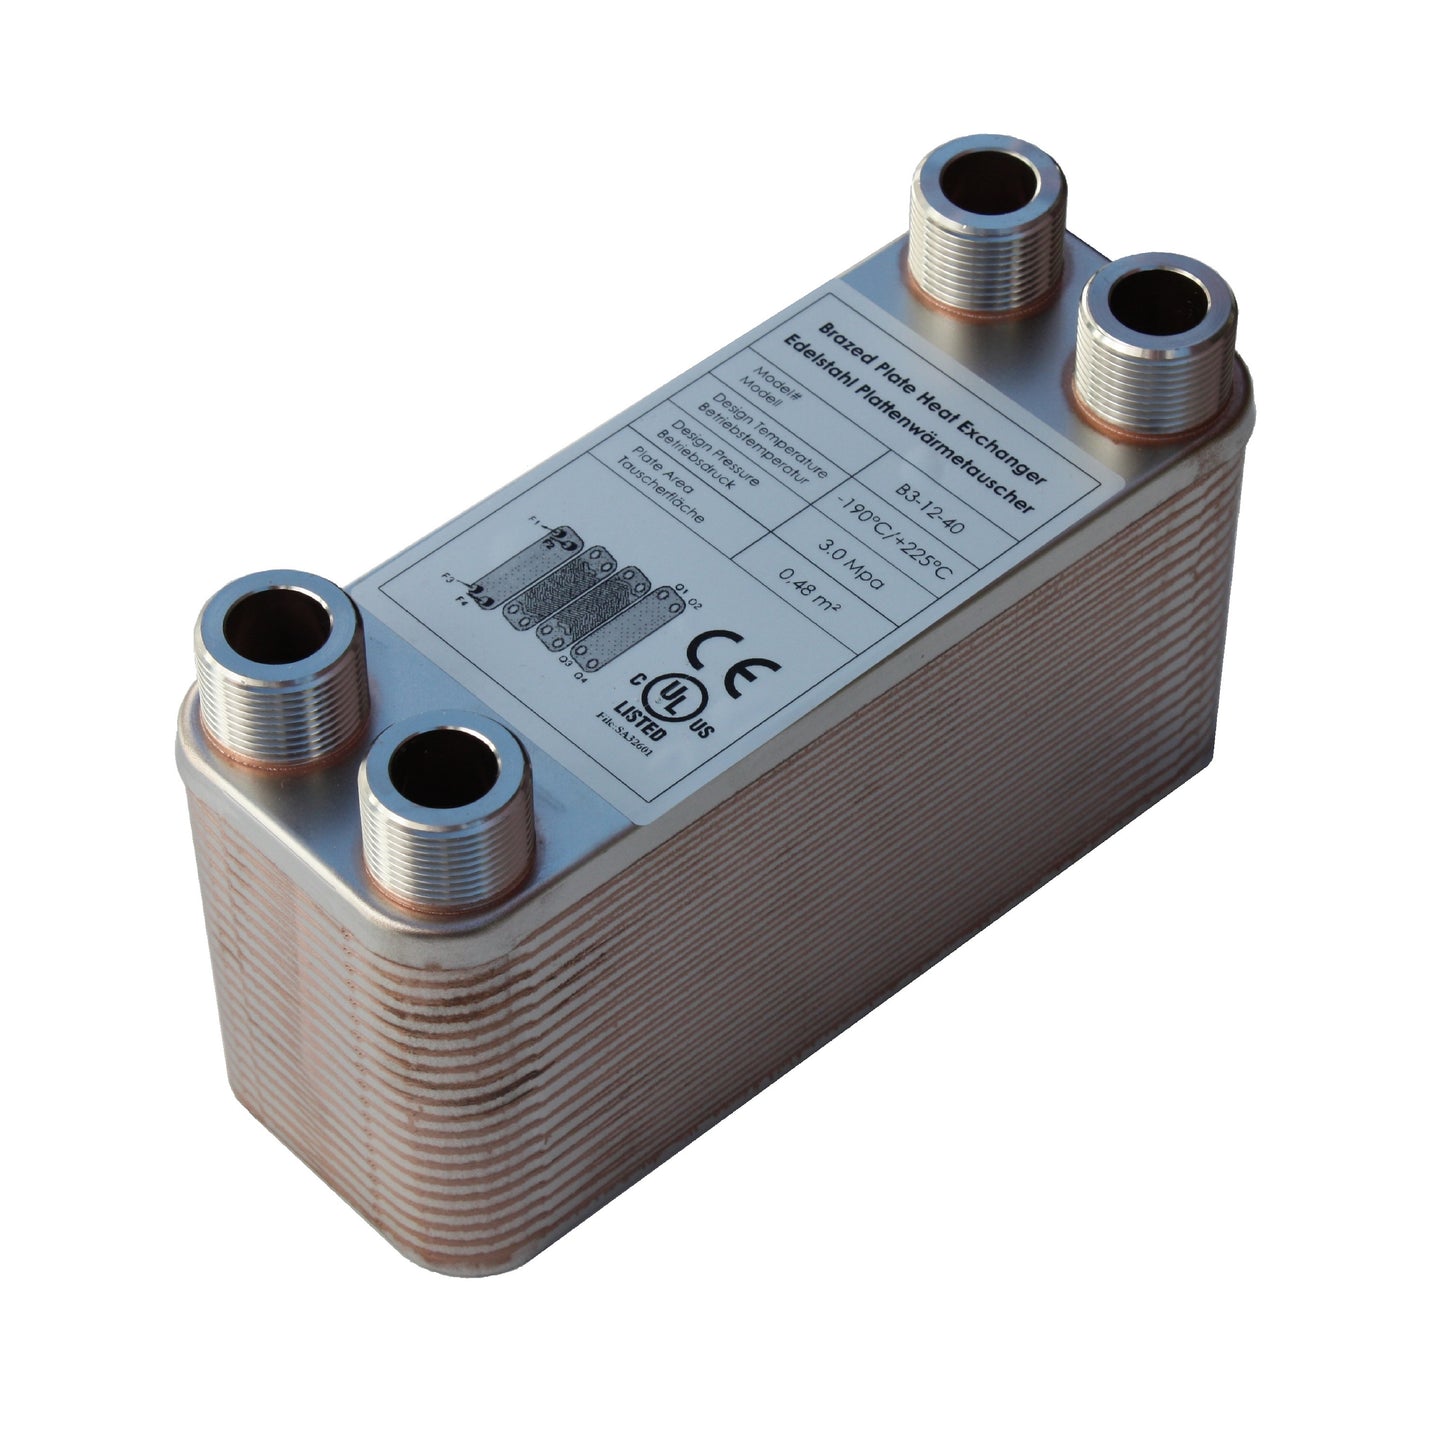 Intercambiador de calor de placas B3-12-40 - 80kW, 40 placas